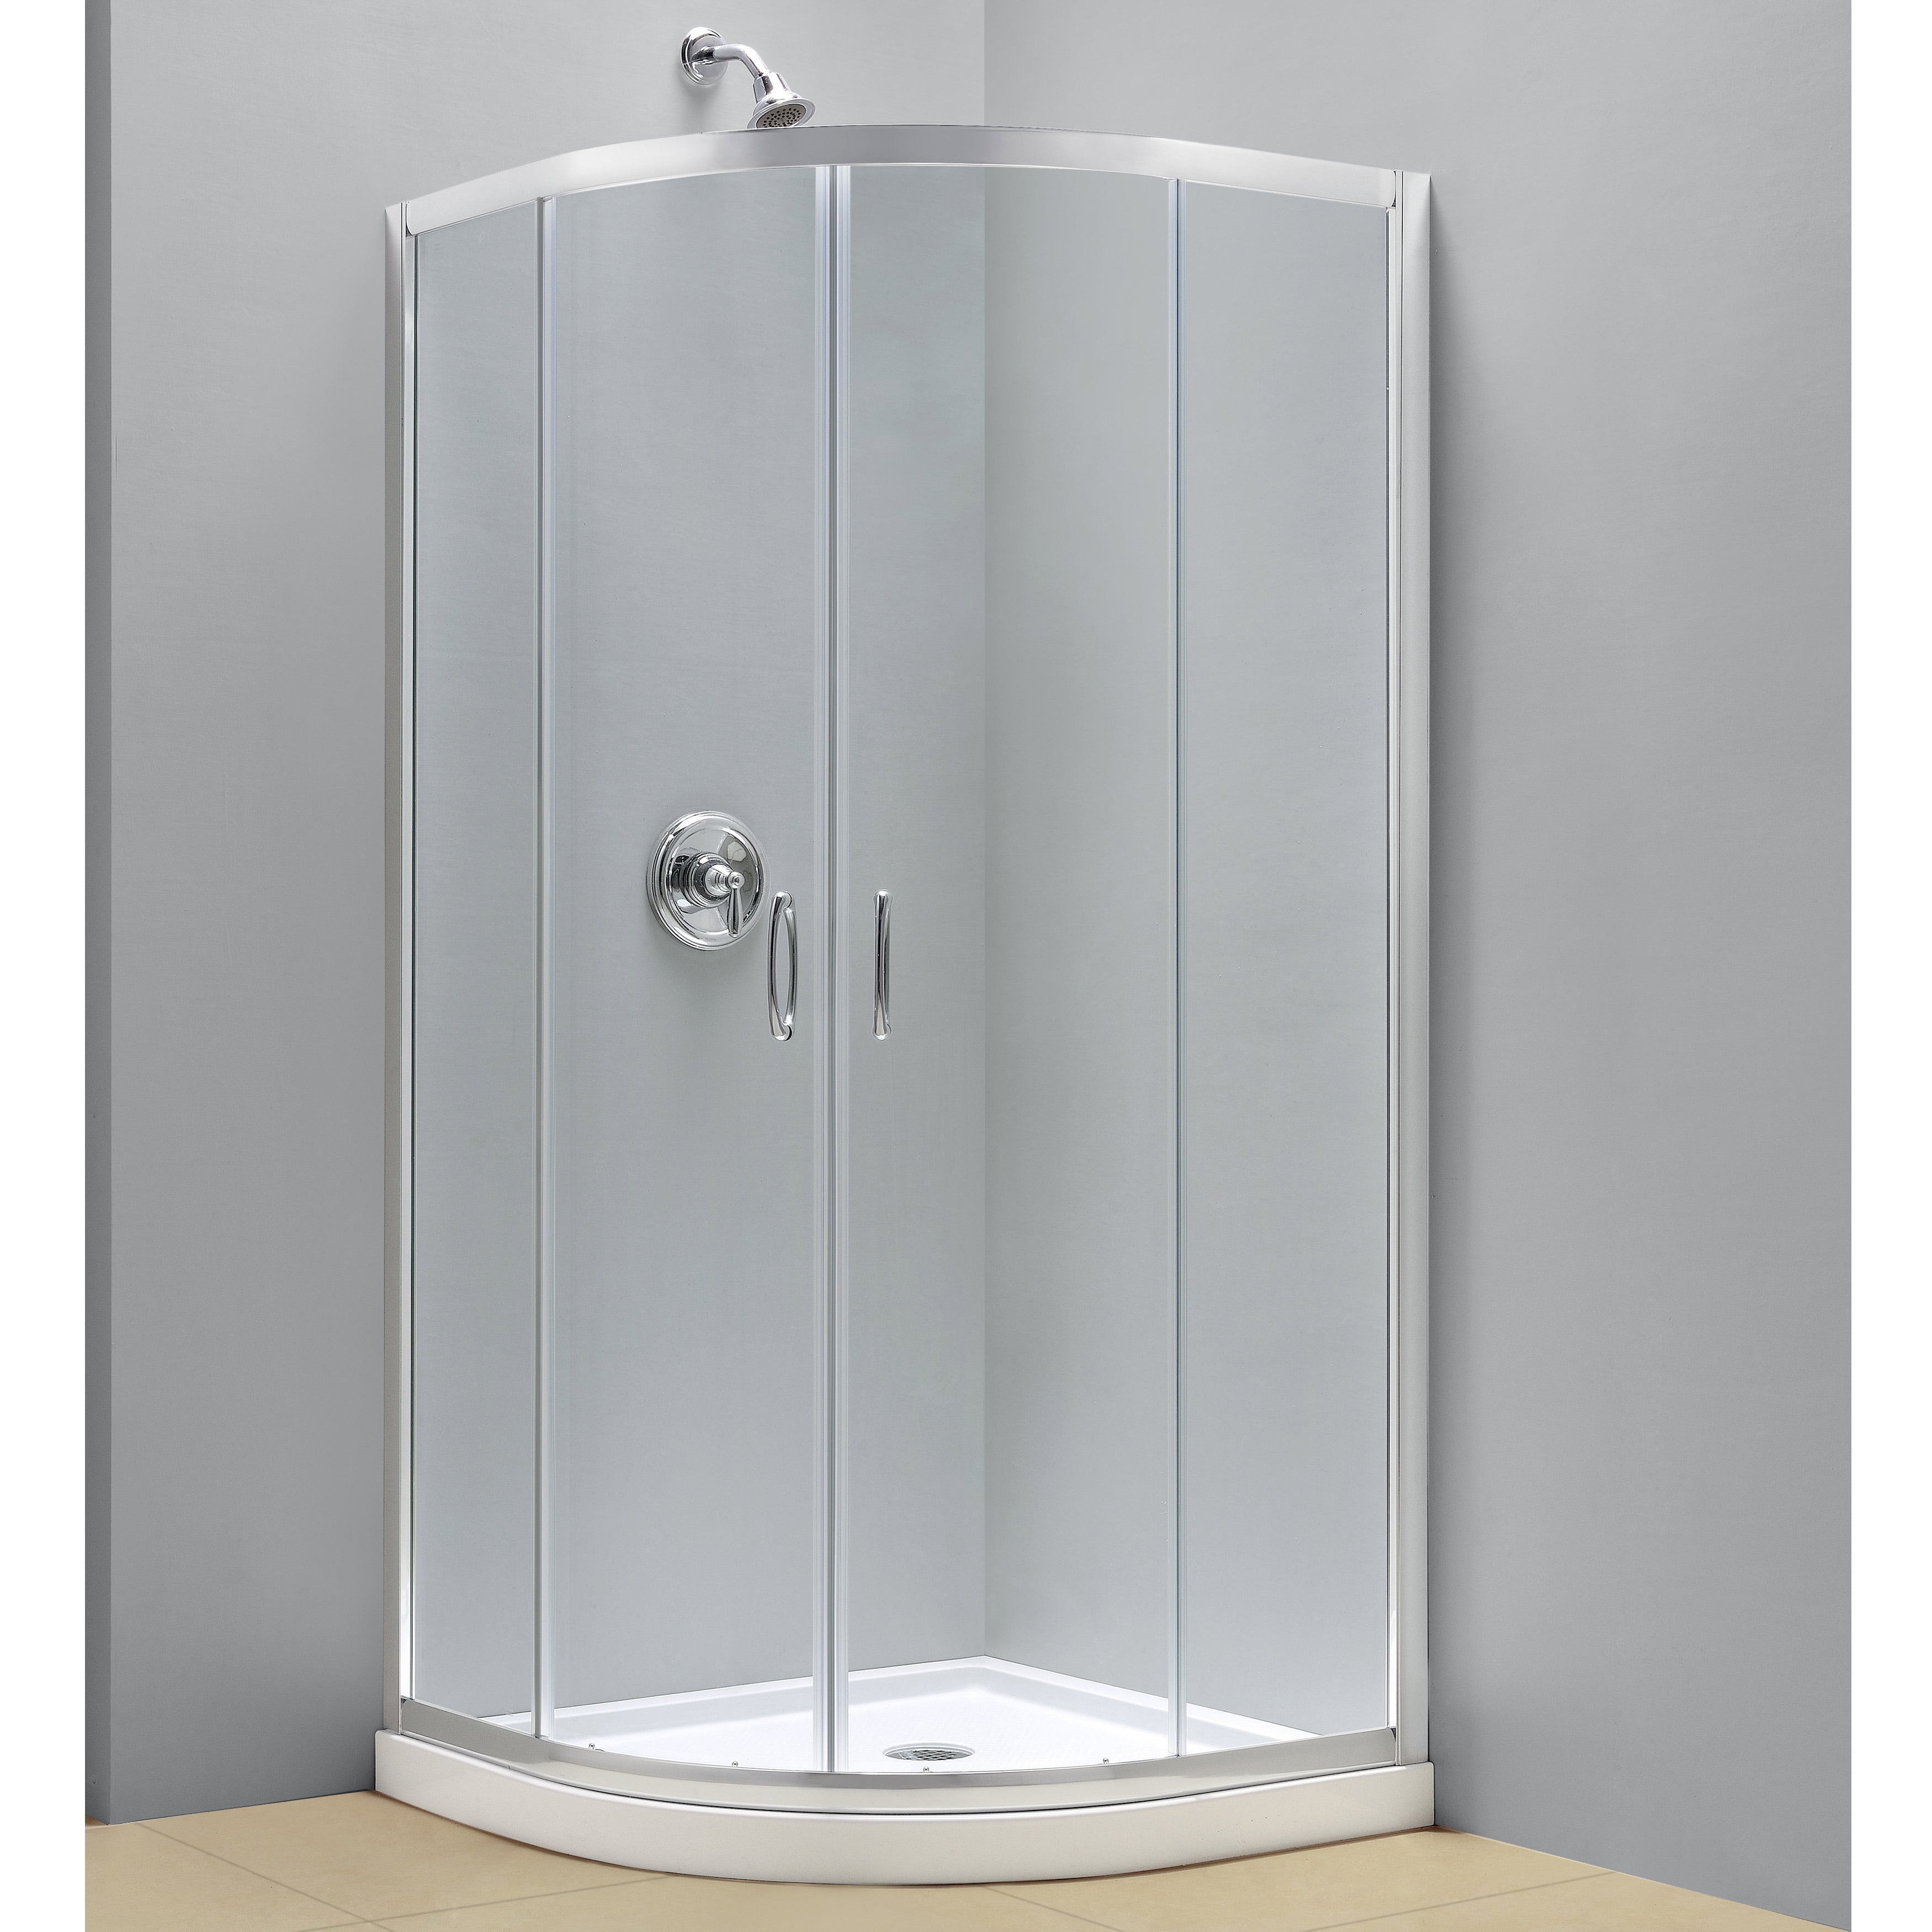 Dreamline Prime Sliding Shower Tempered Glass Enclosure And 36x36 inch Shower Floor